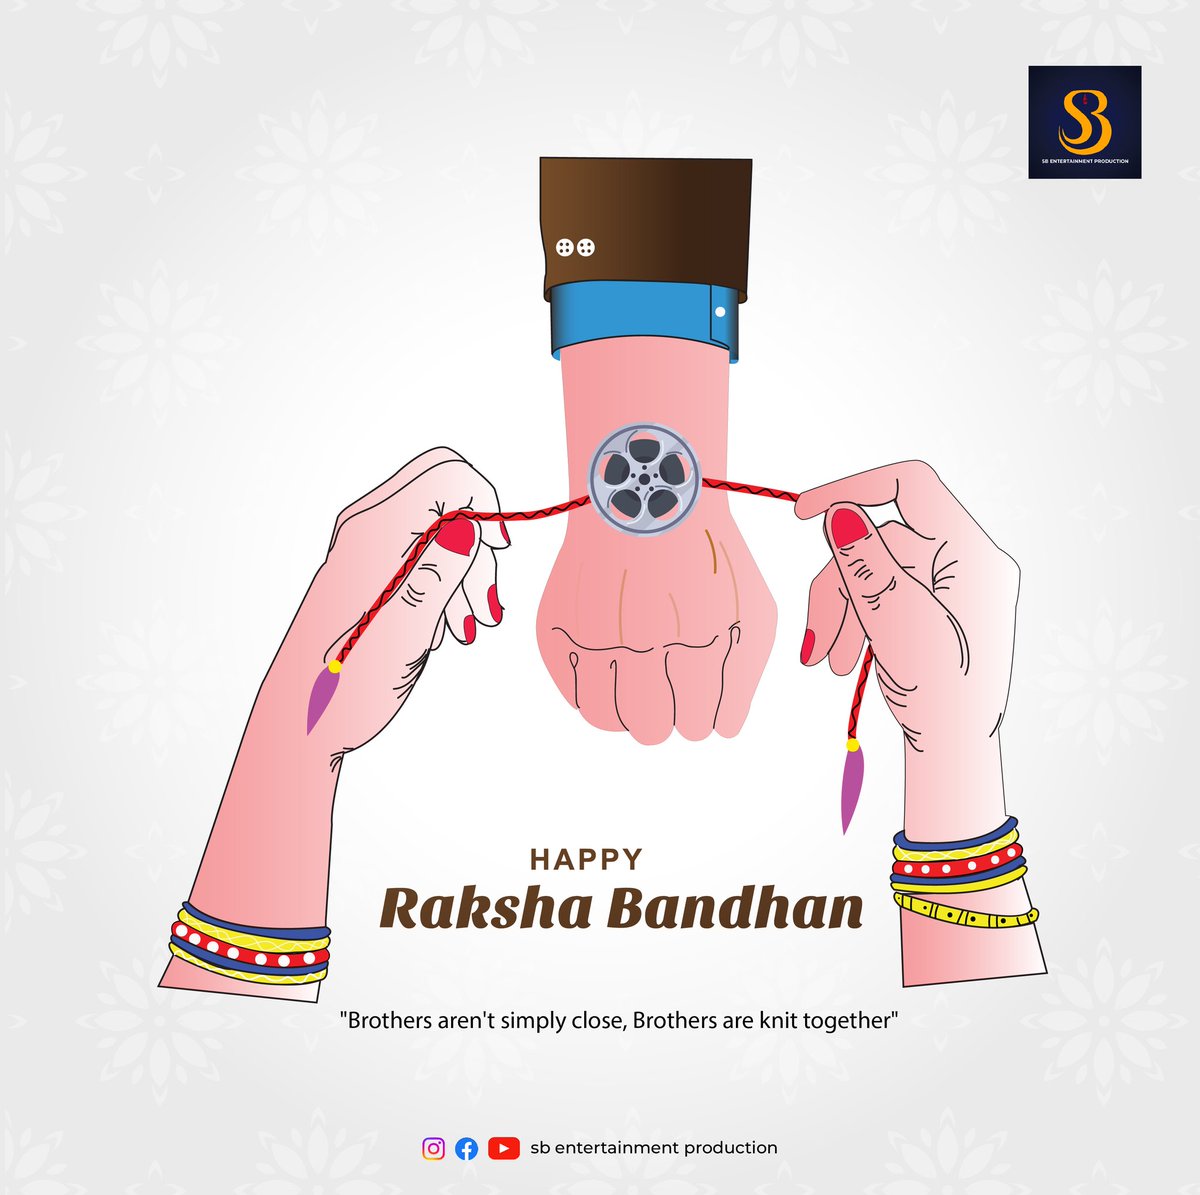 Bound by love, blessed with memories. Happy Raksha Bandhan! 💖👫 #RakhiCelebration
.
 #happyrakshabandhan2023 #rakshabandhanfestival #sbentertainment #sbentertainmentproduction